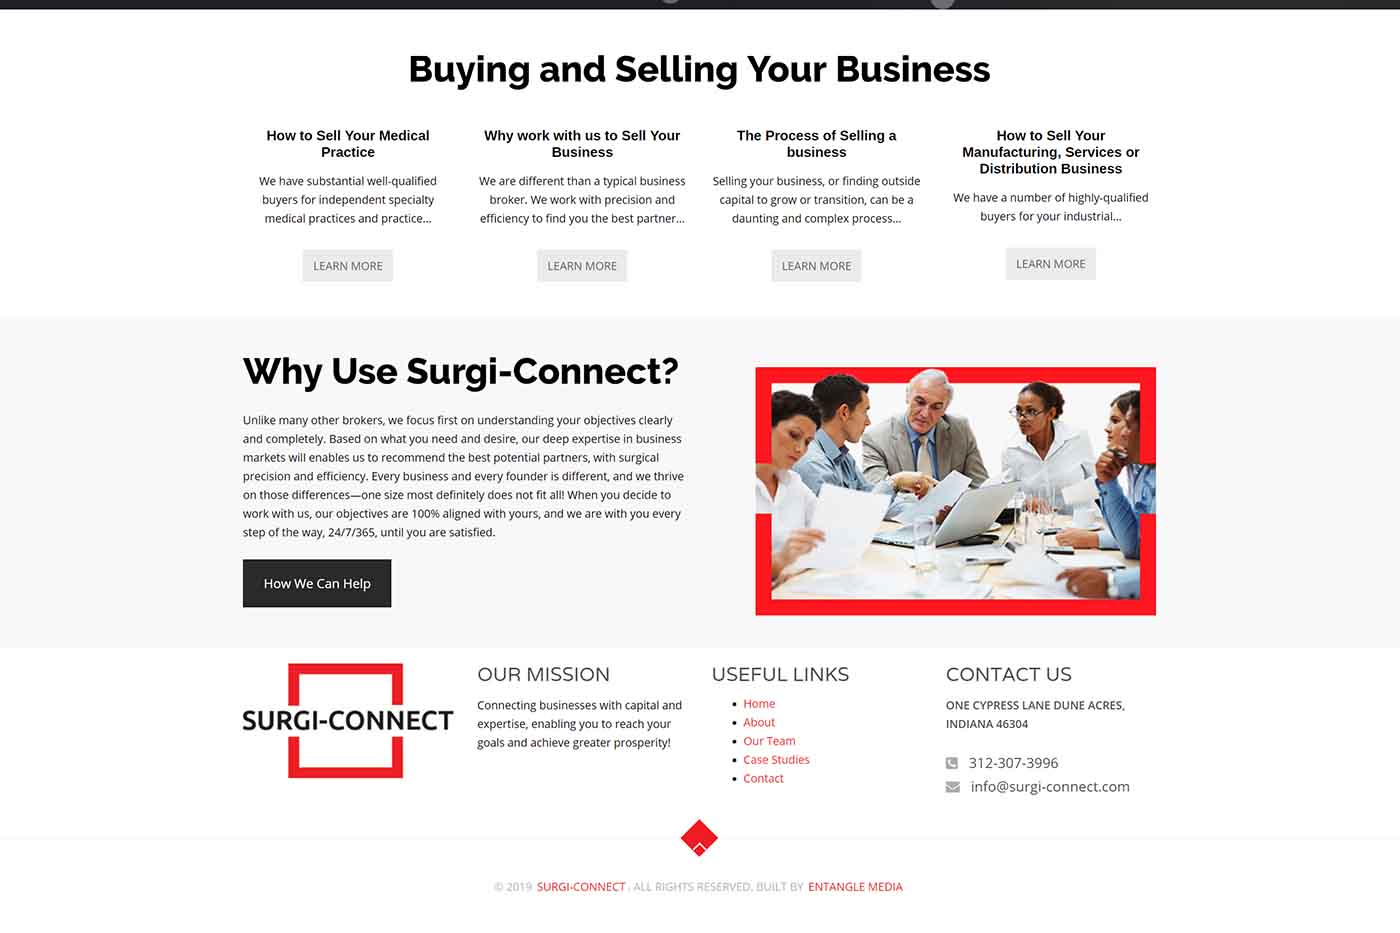 Surgi-Connect